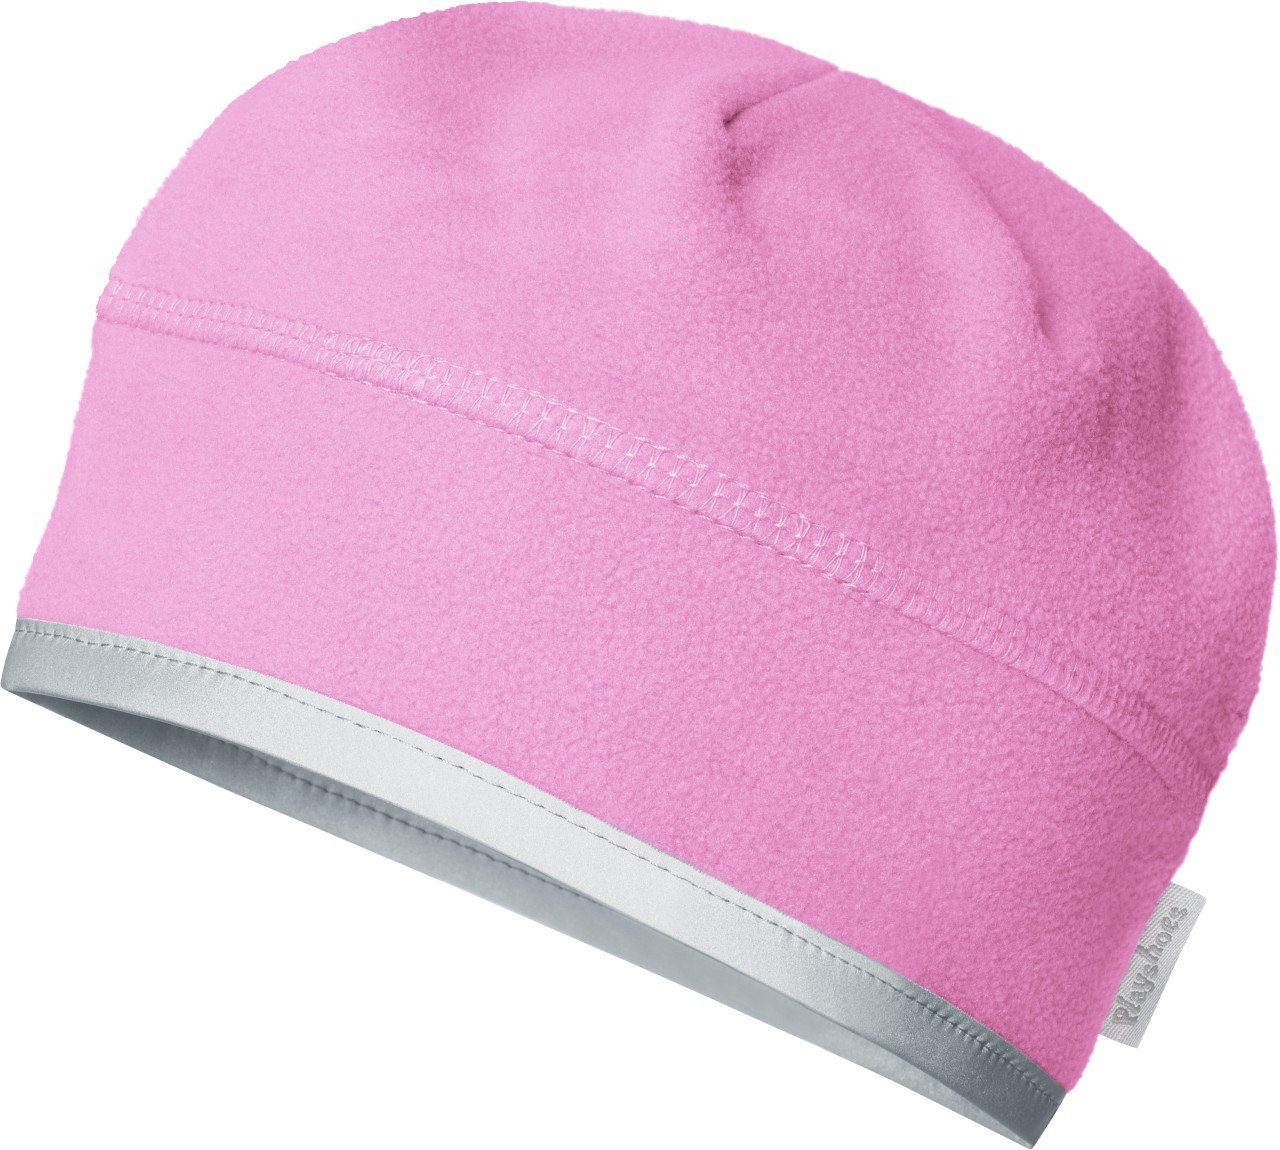 Playshoes Schlupfmütze pink helmgeeignet Fleece-Mütze